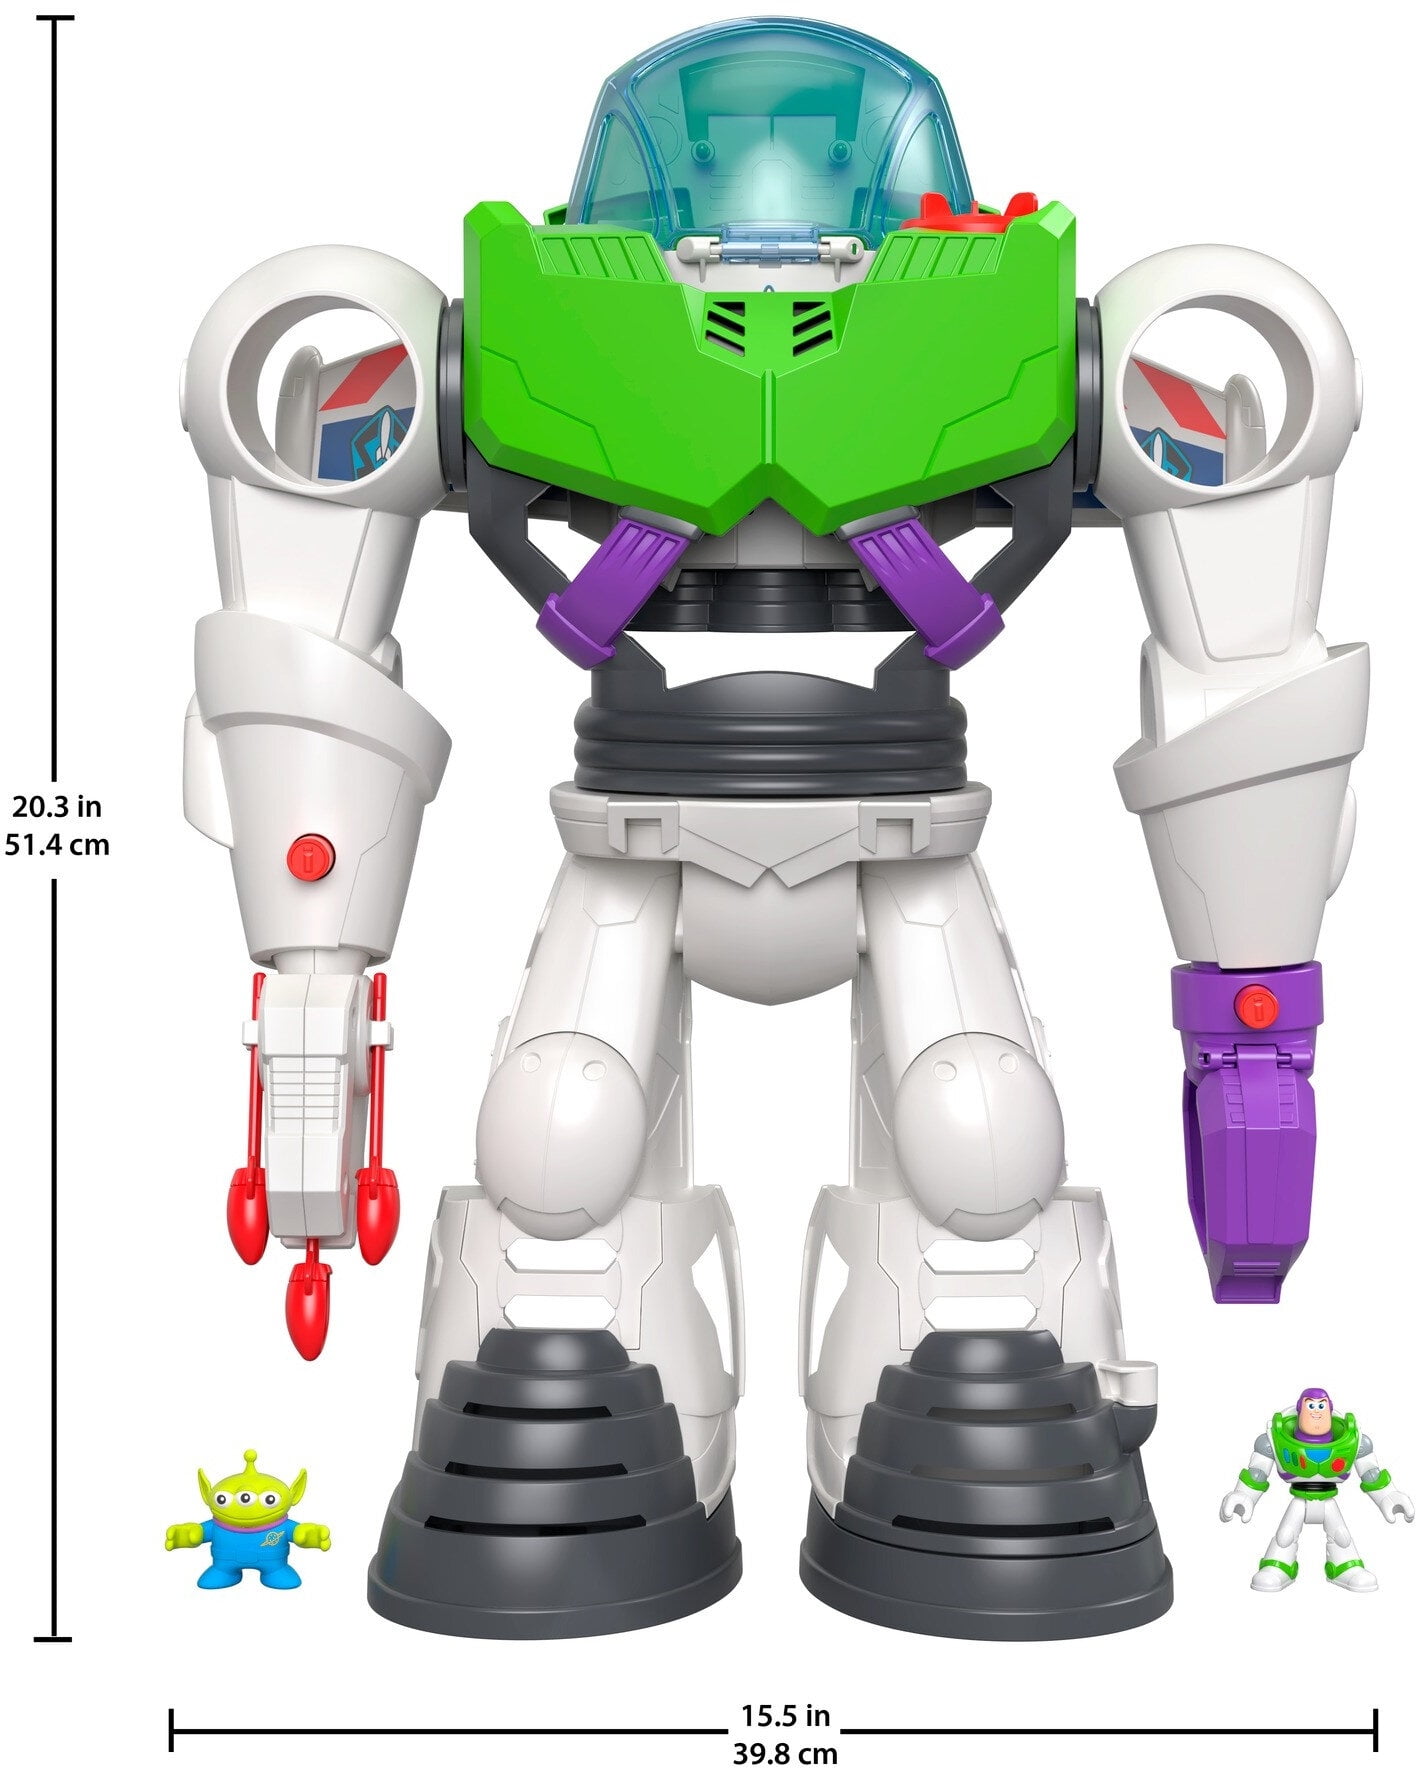 Gioco Allegro Chirurgo Buzz Lightyear Toy Story - Hasbro – The Toys Store